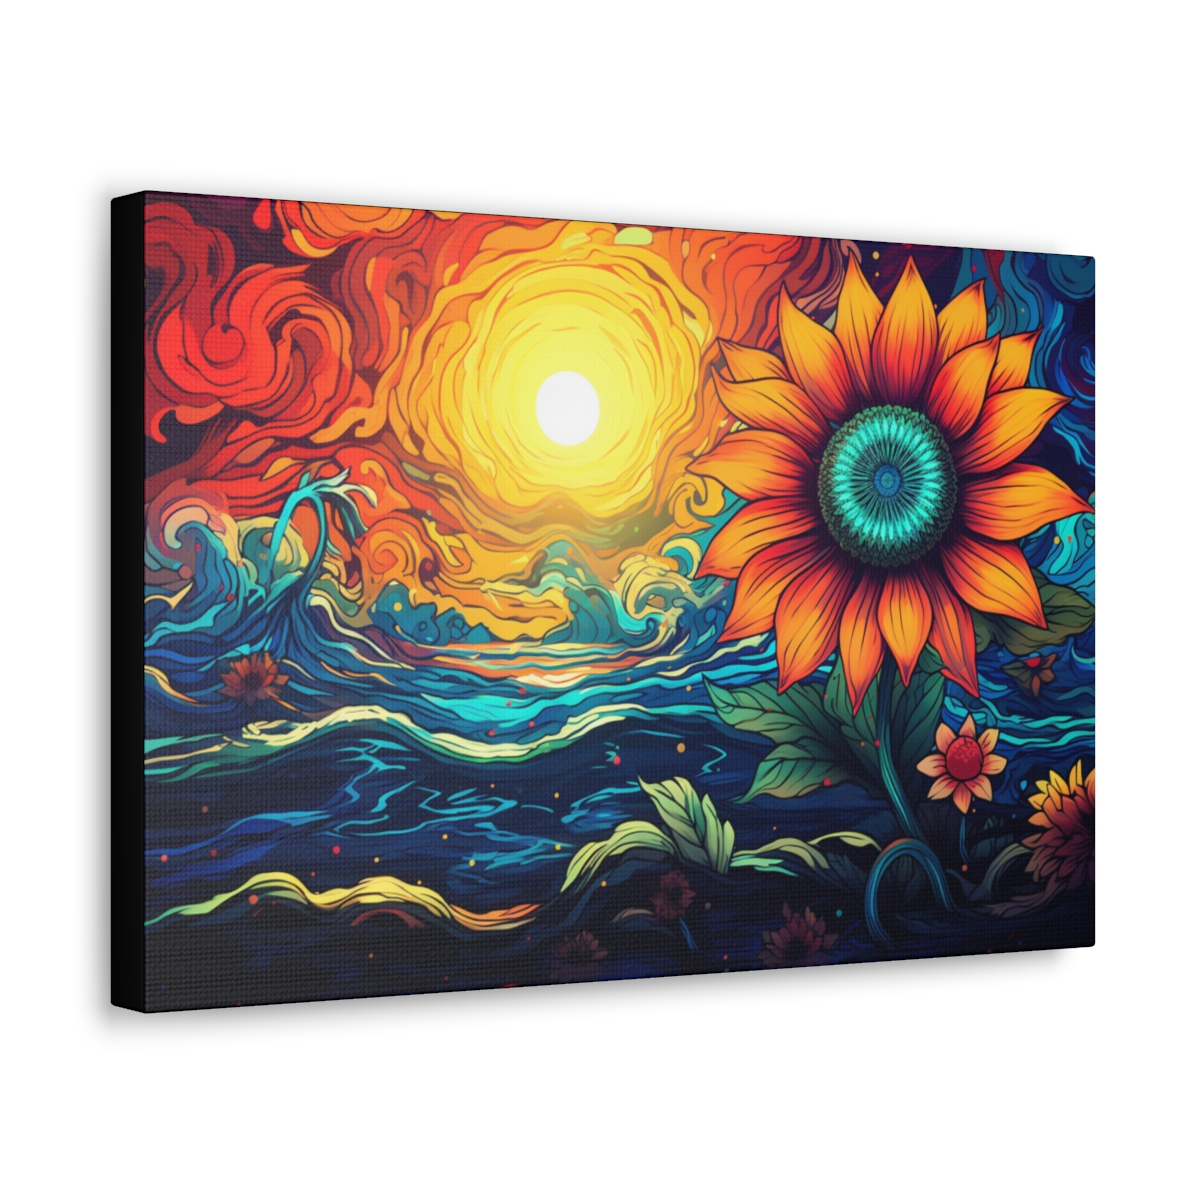 Hippie Trippy Art Canvas Print: Sunflower Of Hope